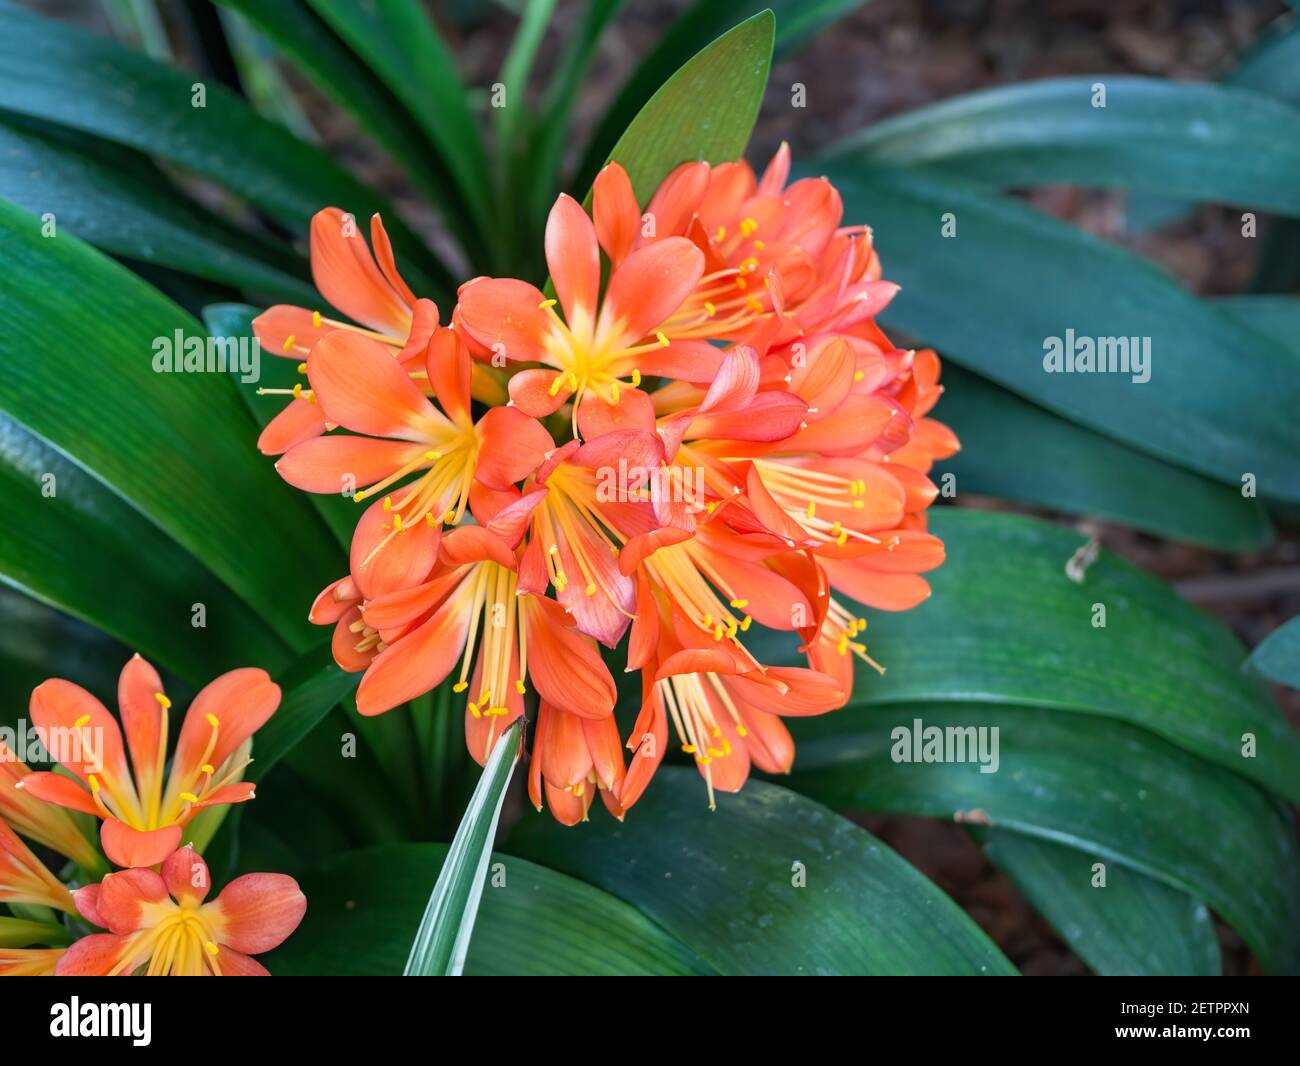 Orange Clivia miniata, the Natal lily or bush lily flower plant. Orange flower blooming. Stock Photo